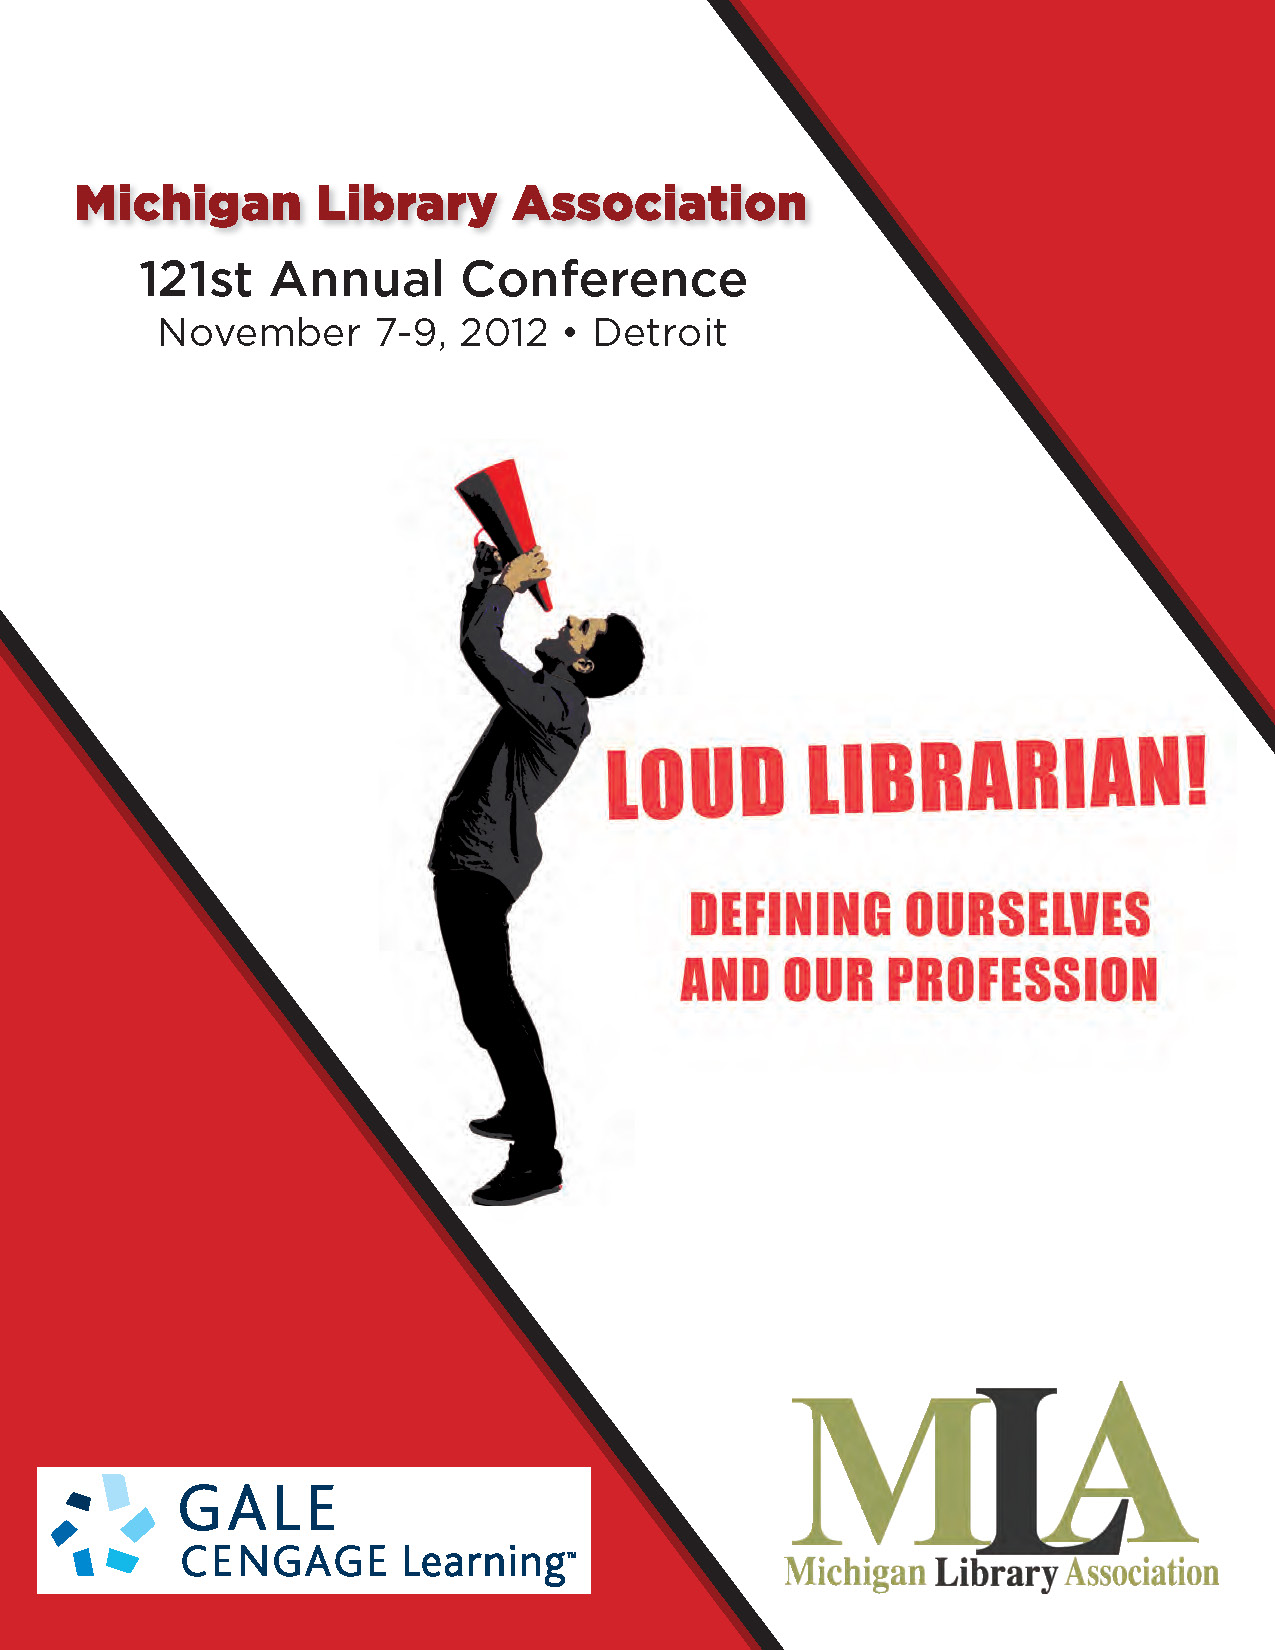 MLA 2012 Program Book Cover image - linked to program book pdf